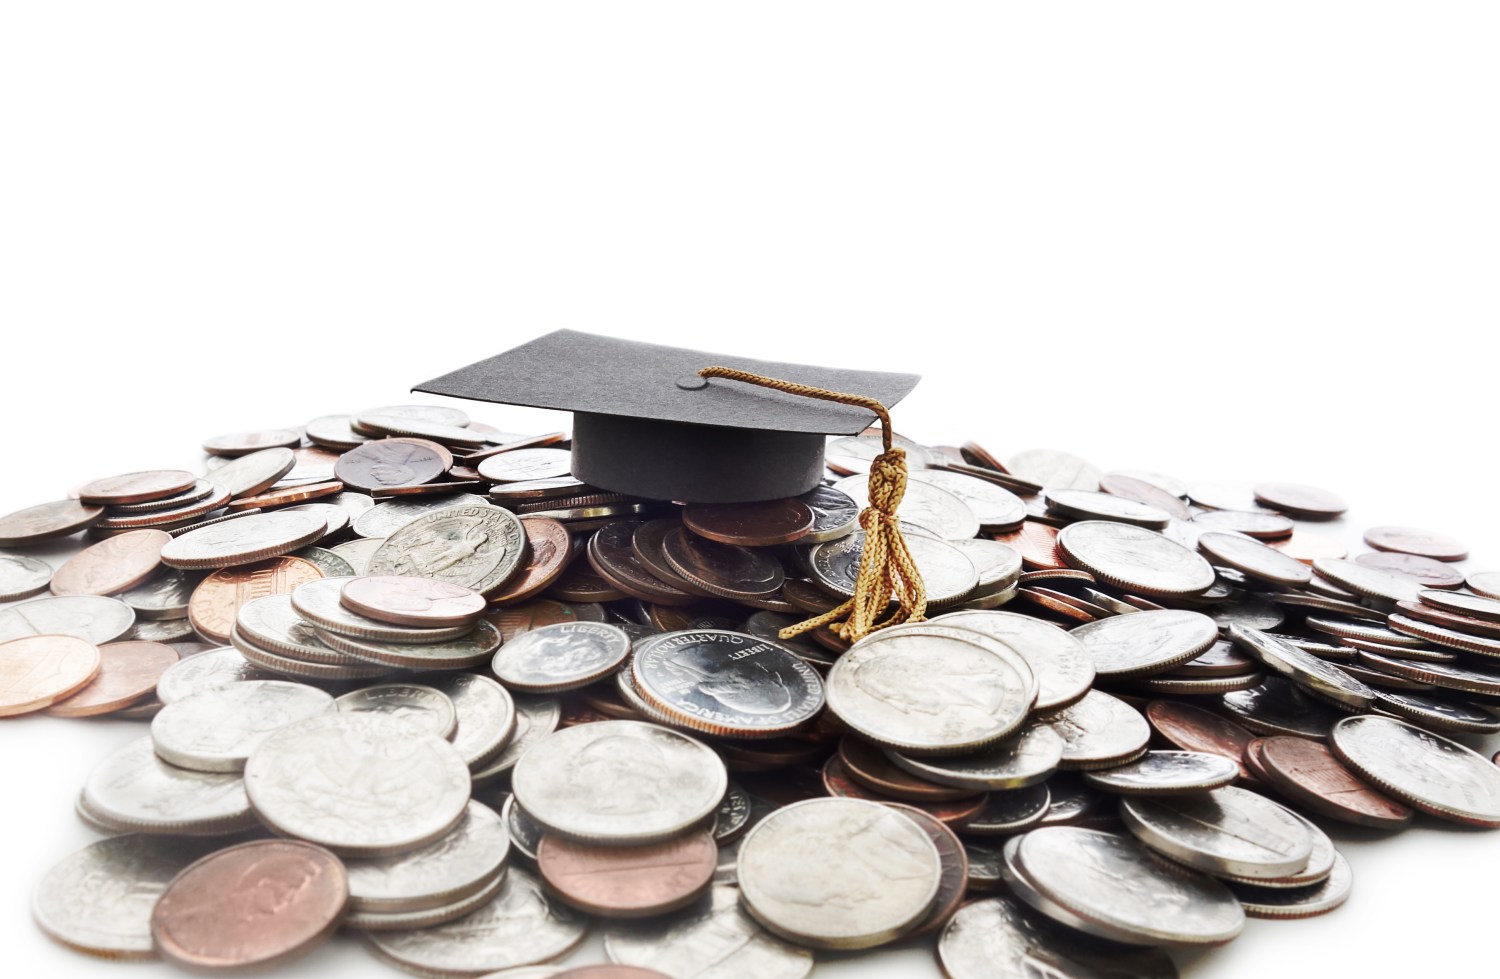 Paper graduation cap on a pile of coins.